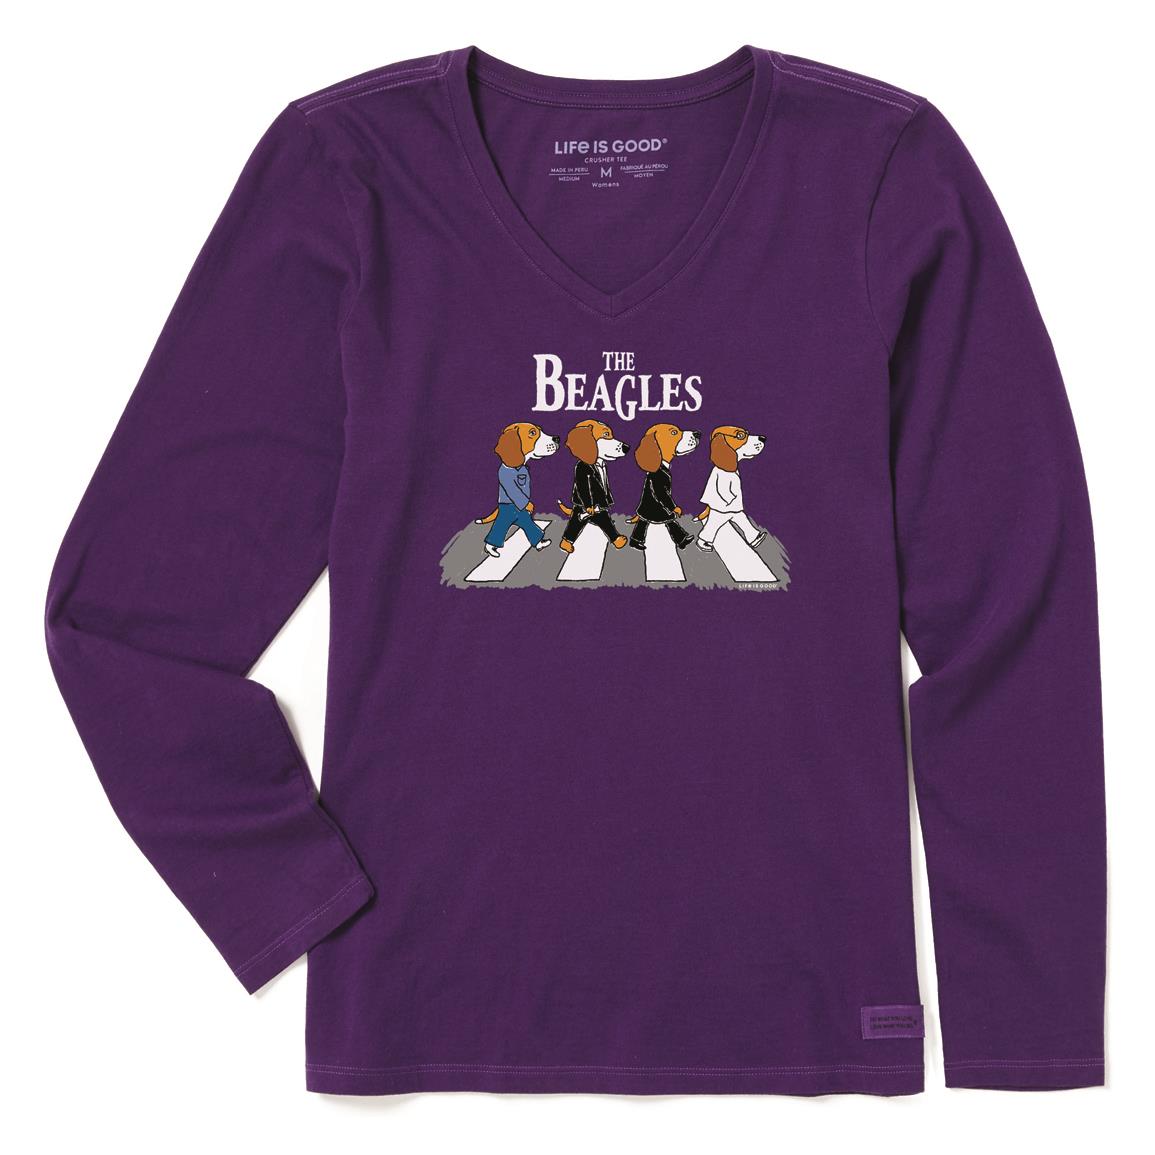 Life is Good Women's The Beagles Long Sleeve Crusher Lite Vee Shirt, Deep Purple